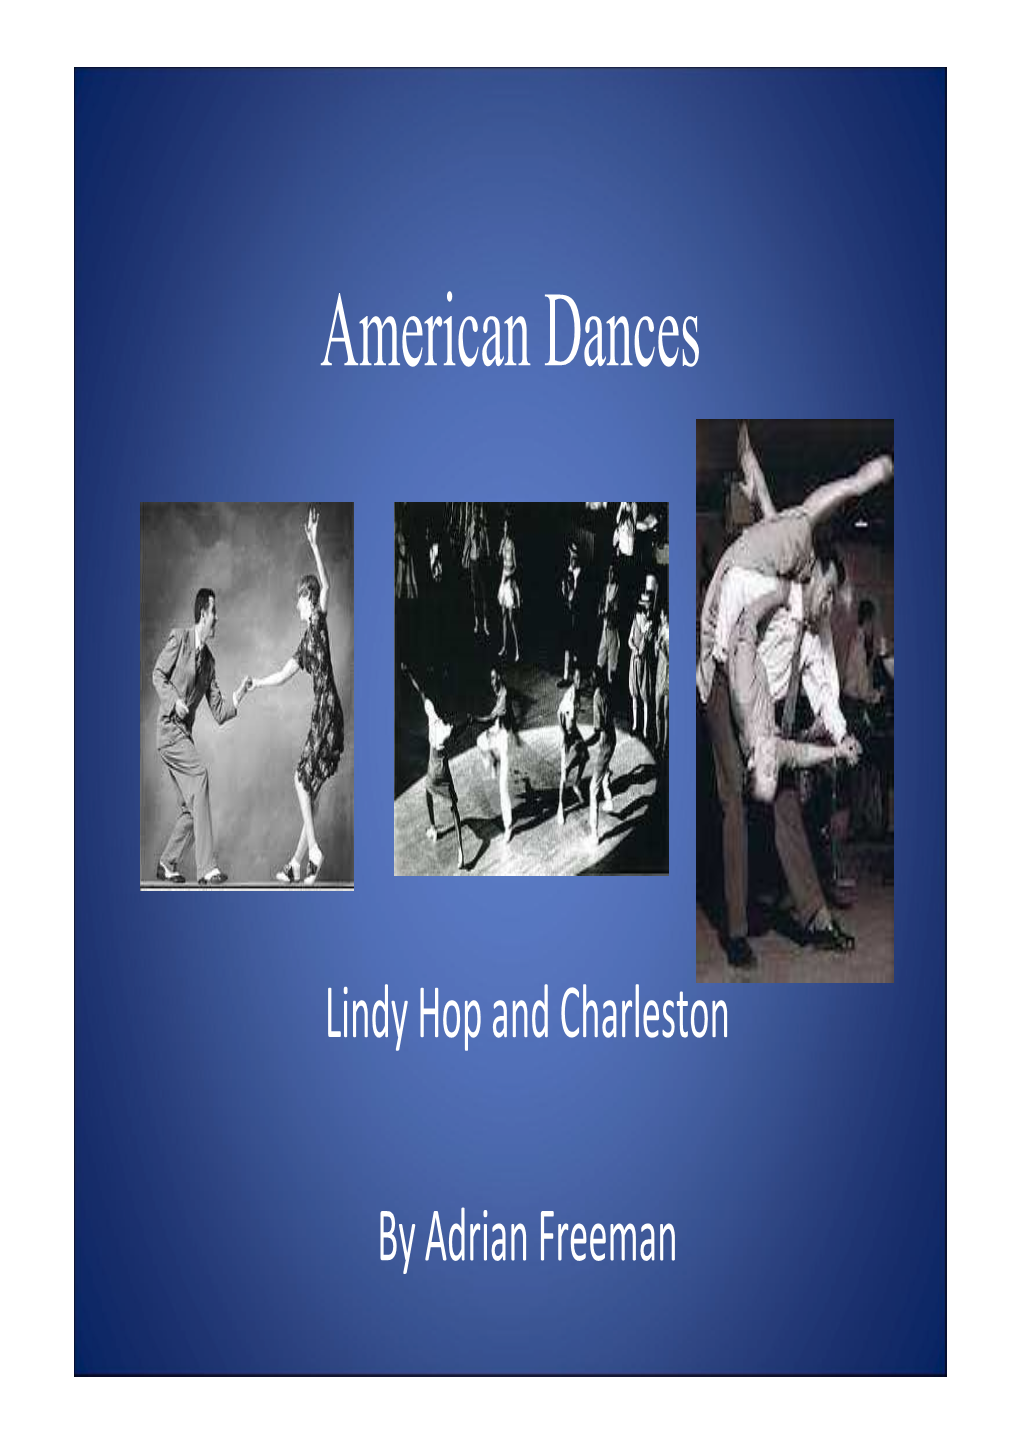 Lindy Hop and Charleston by Adrian Freeman